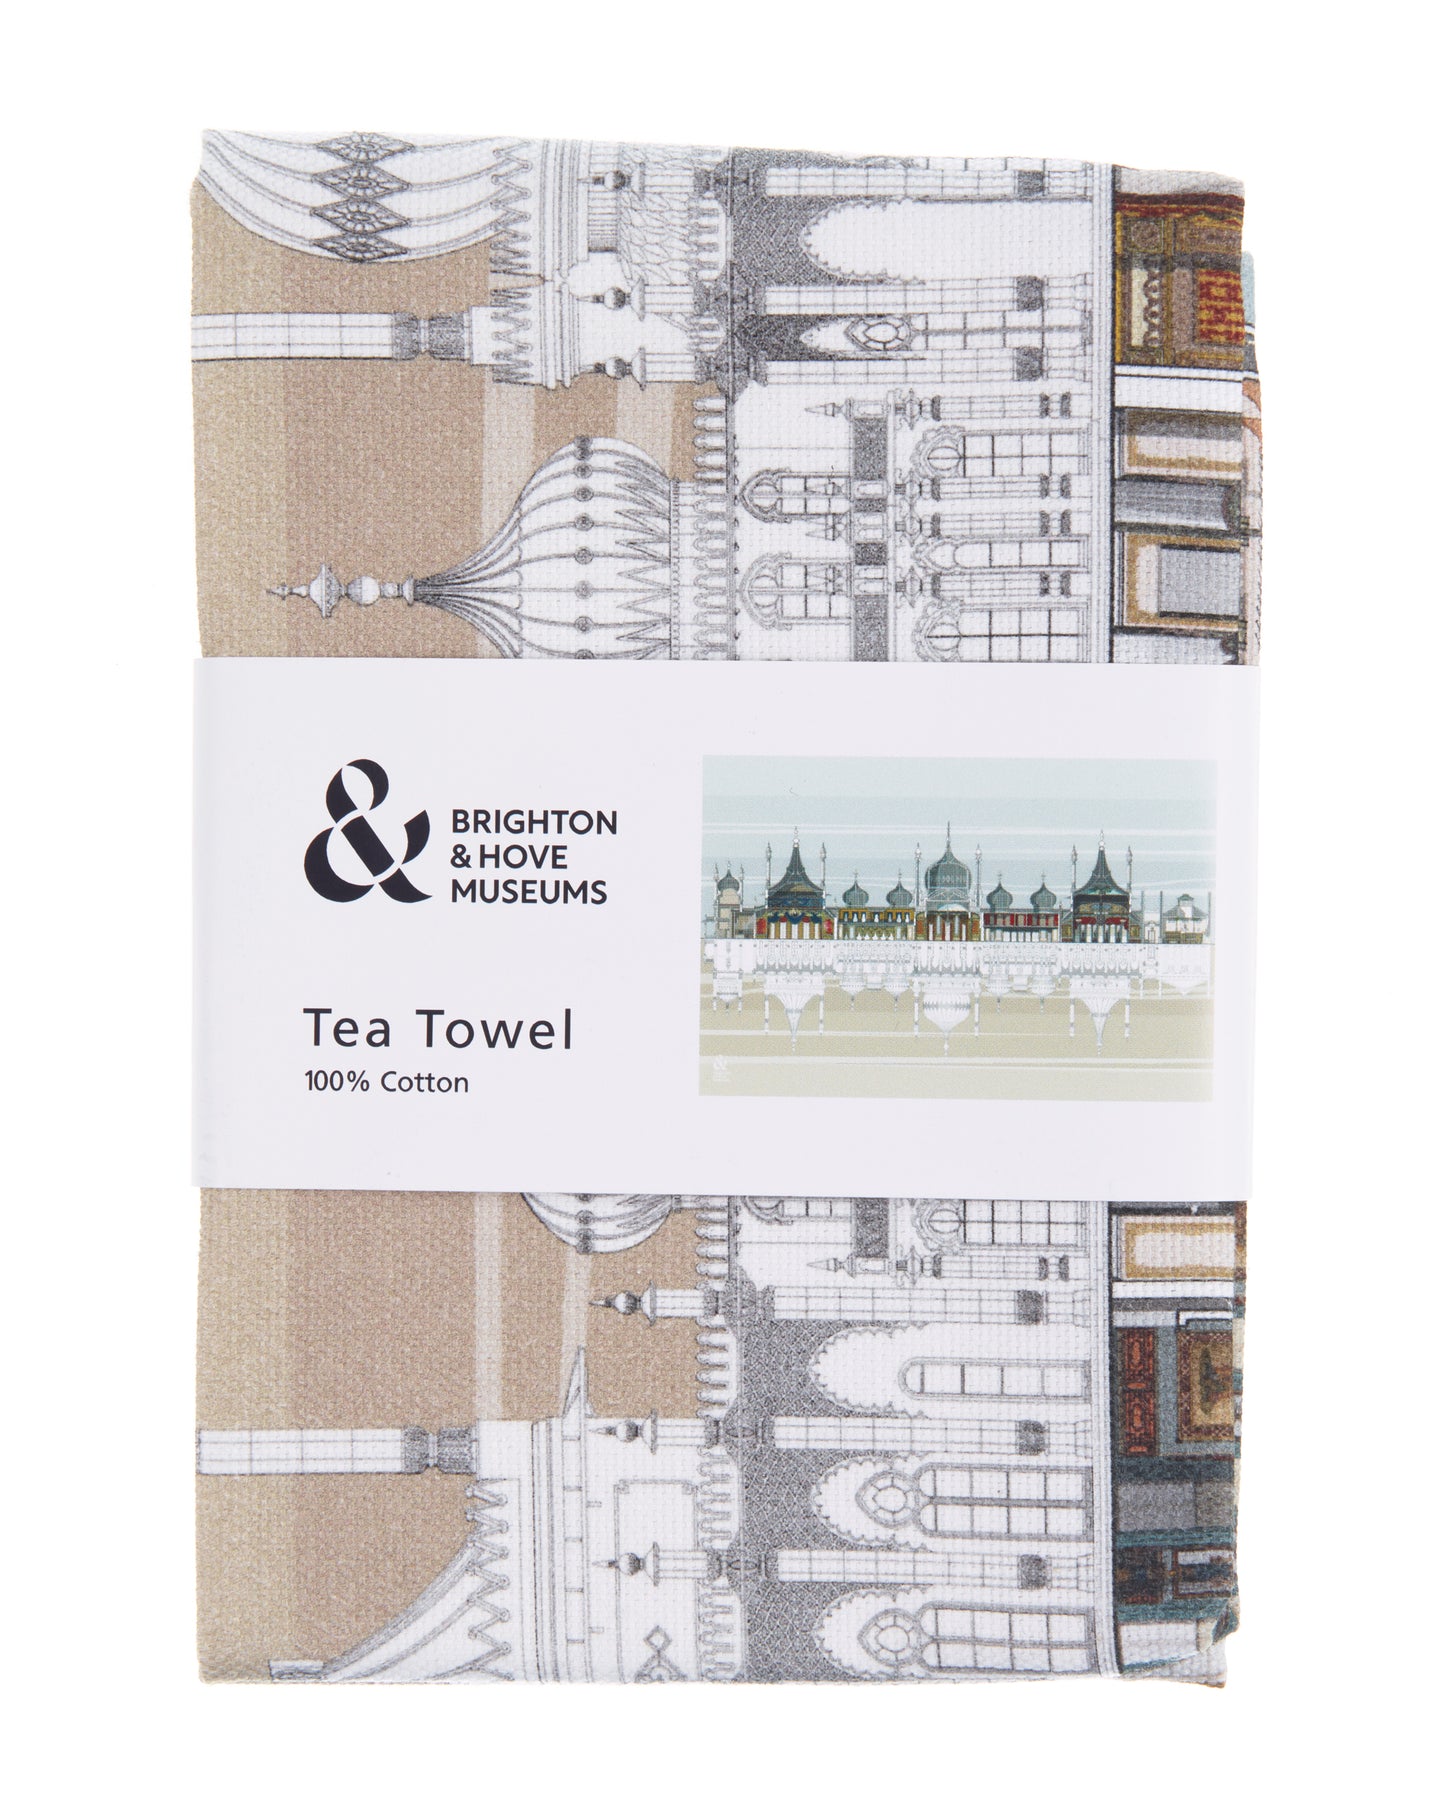 Tea Towel - The Royal Pavilion Interior